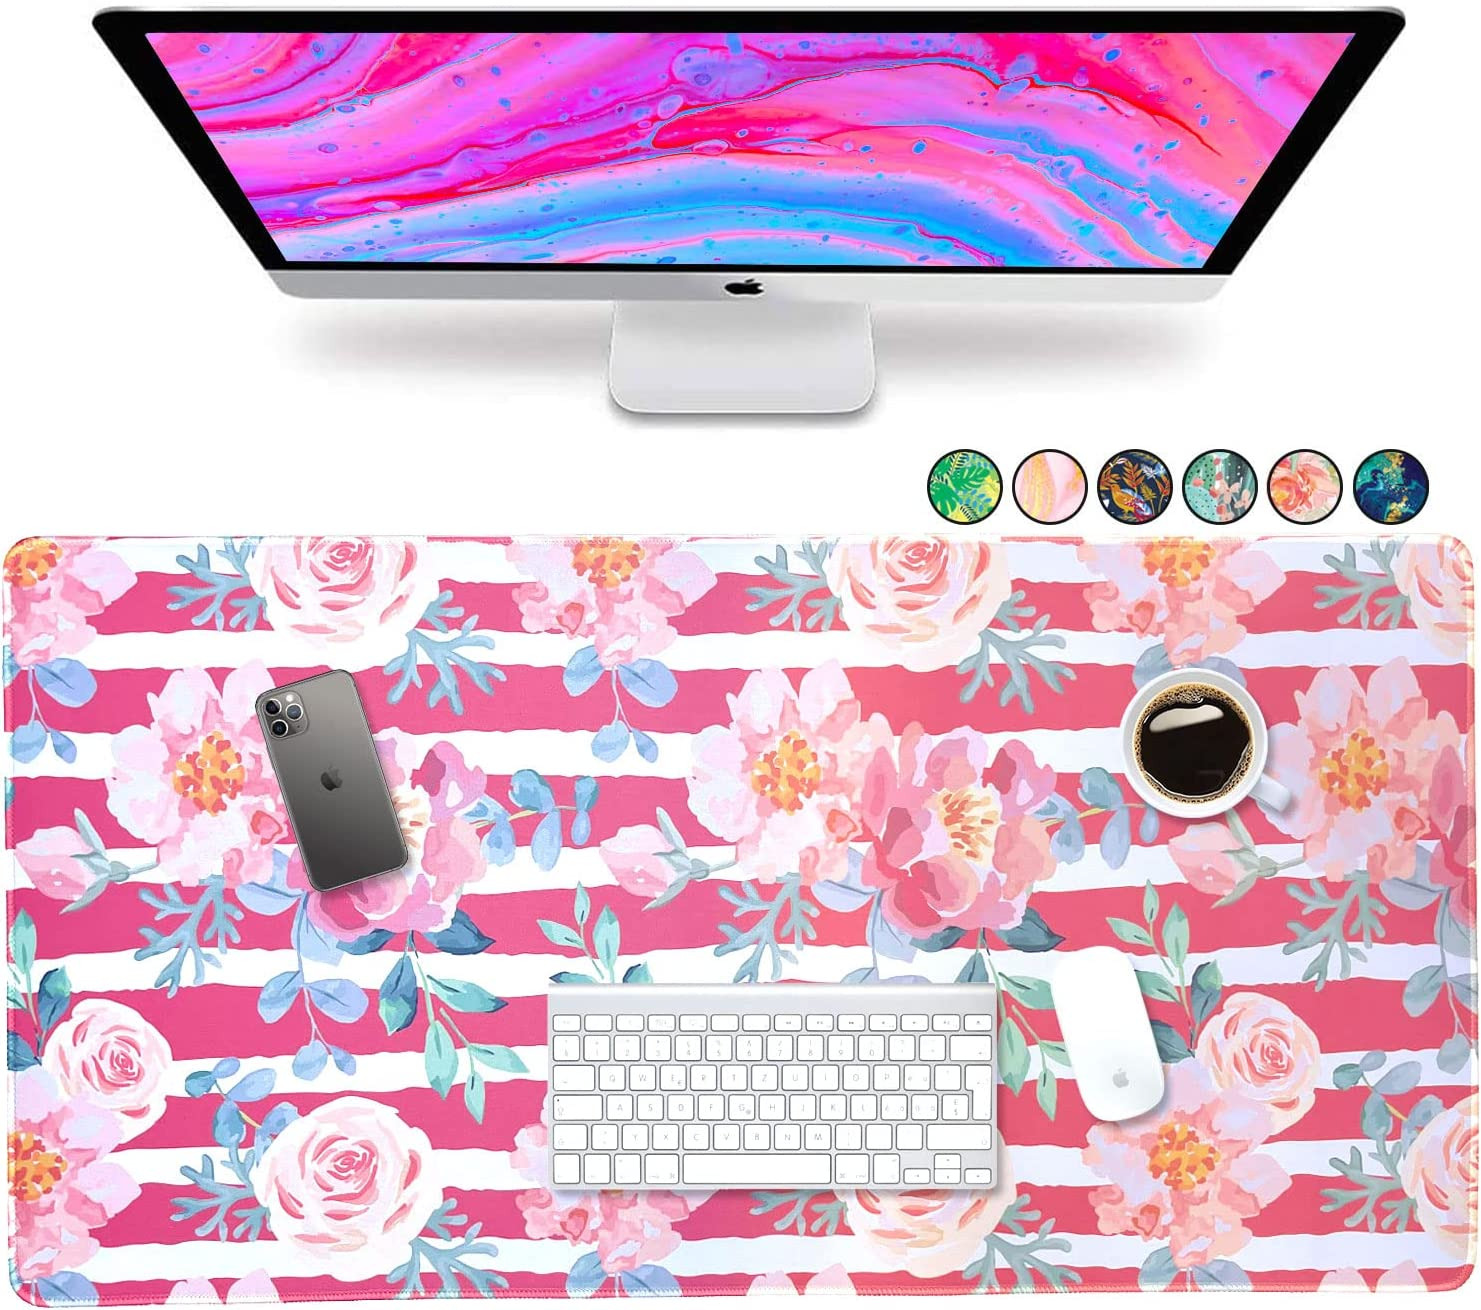 French KOKO Large Mouse Pad Desk Mat Keyboard Desktop Home Office School Essenti